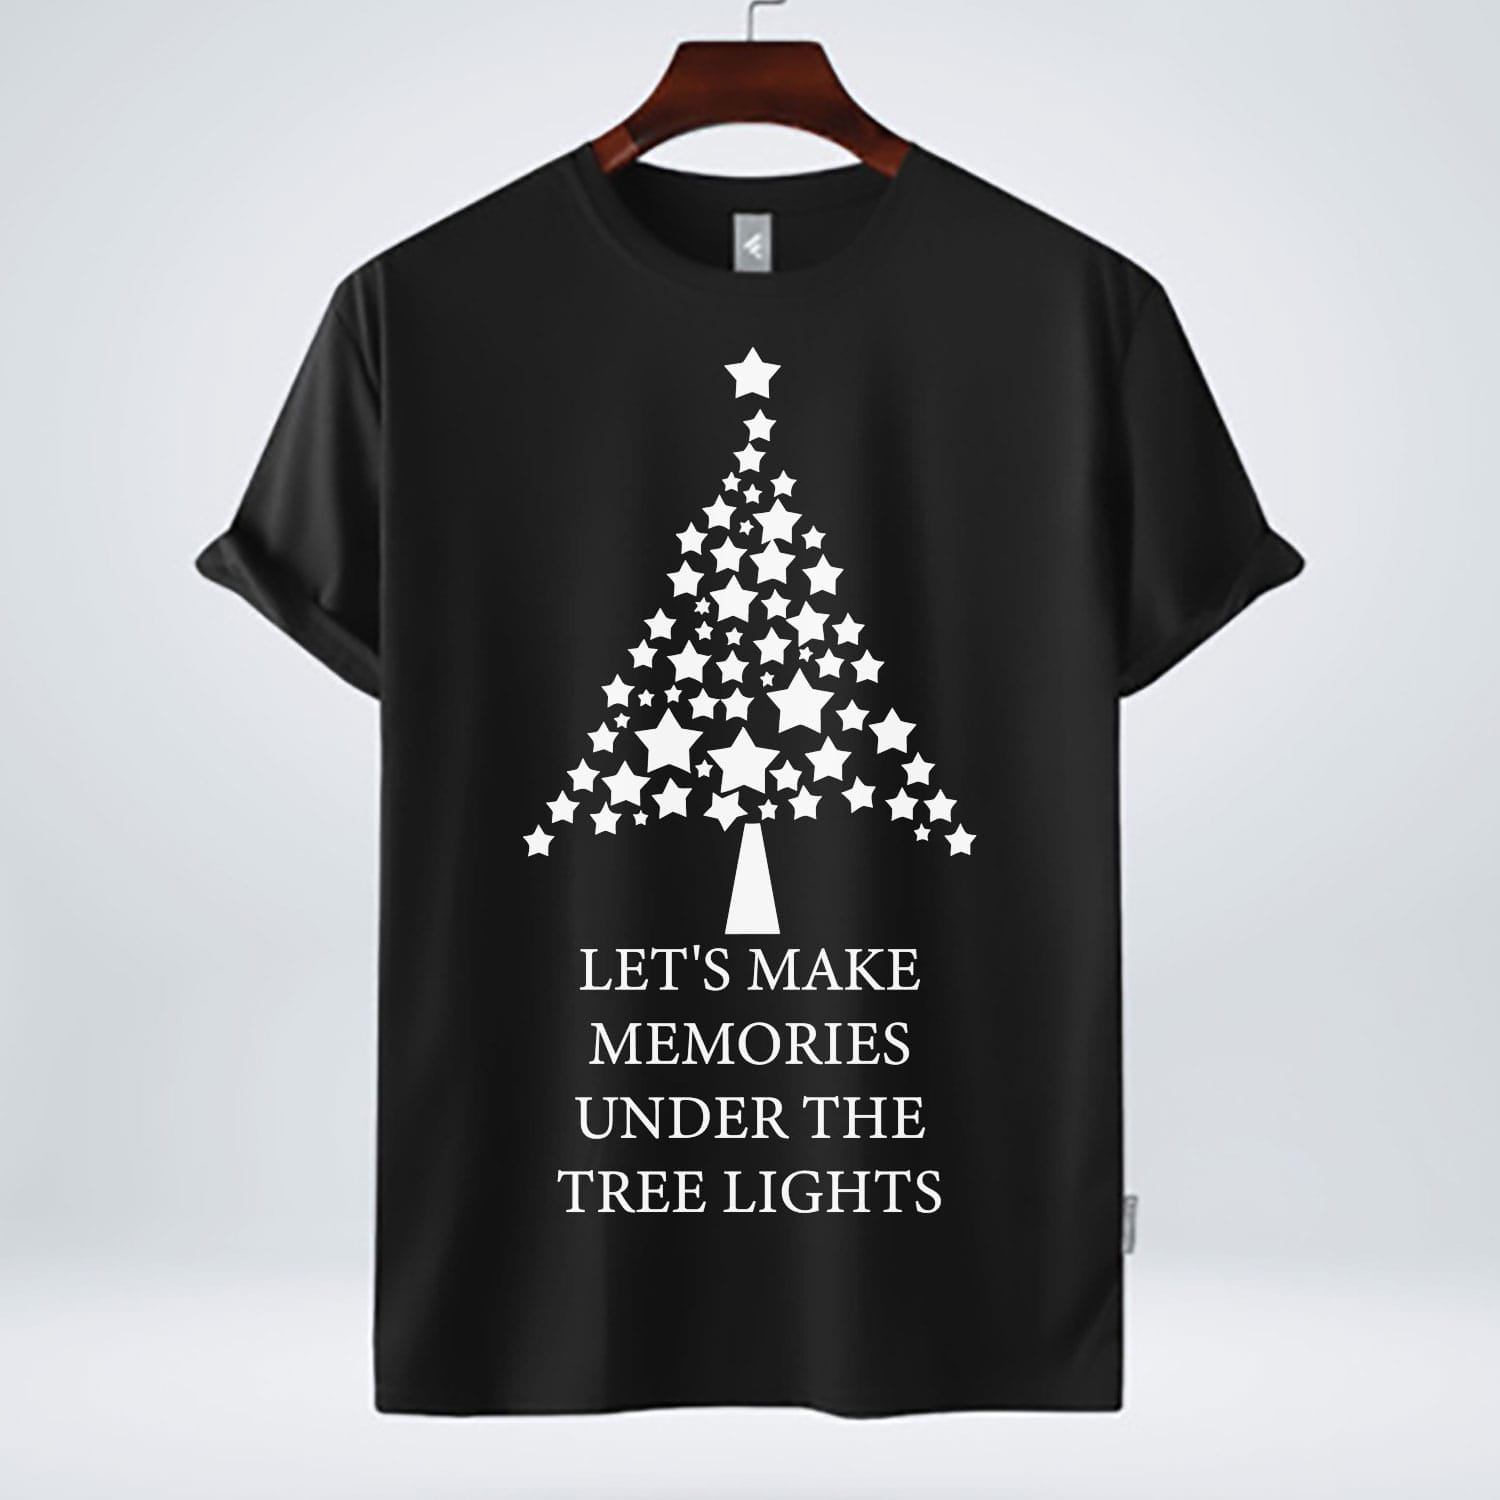 Memories Under The Tree Lights - Christmas Free T-Shirt Design